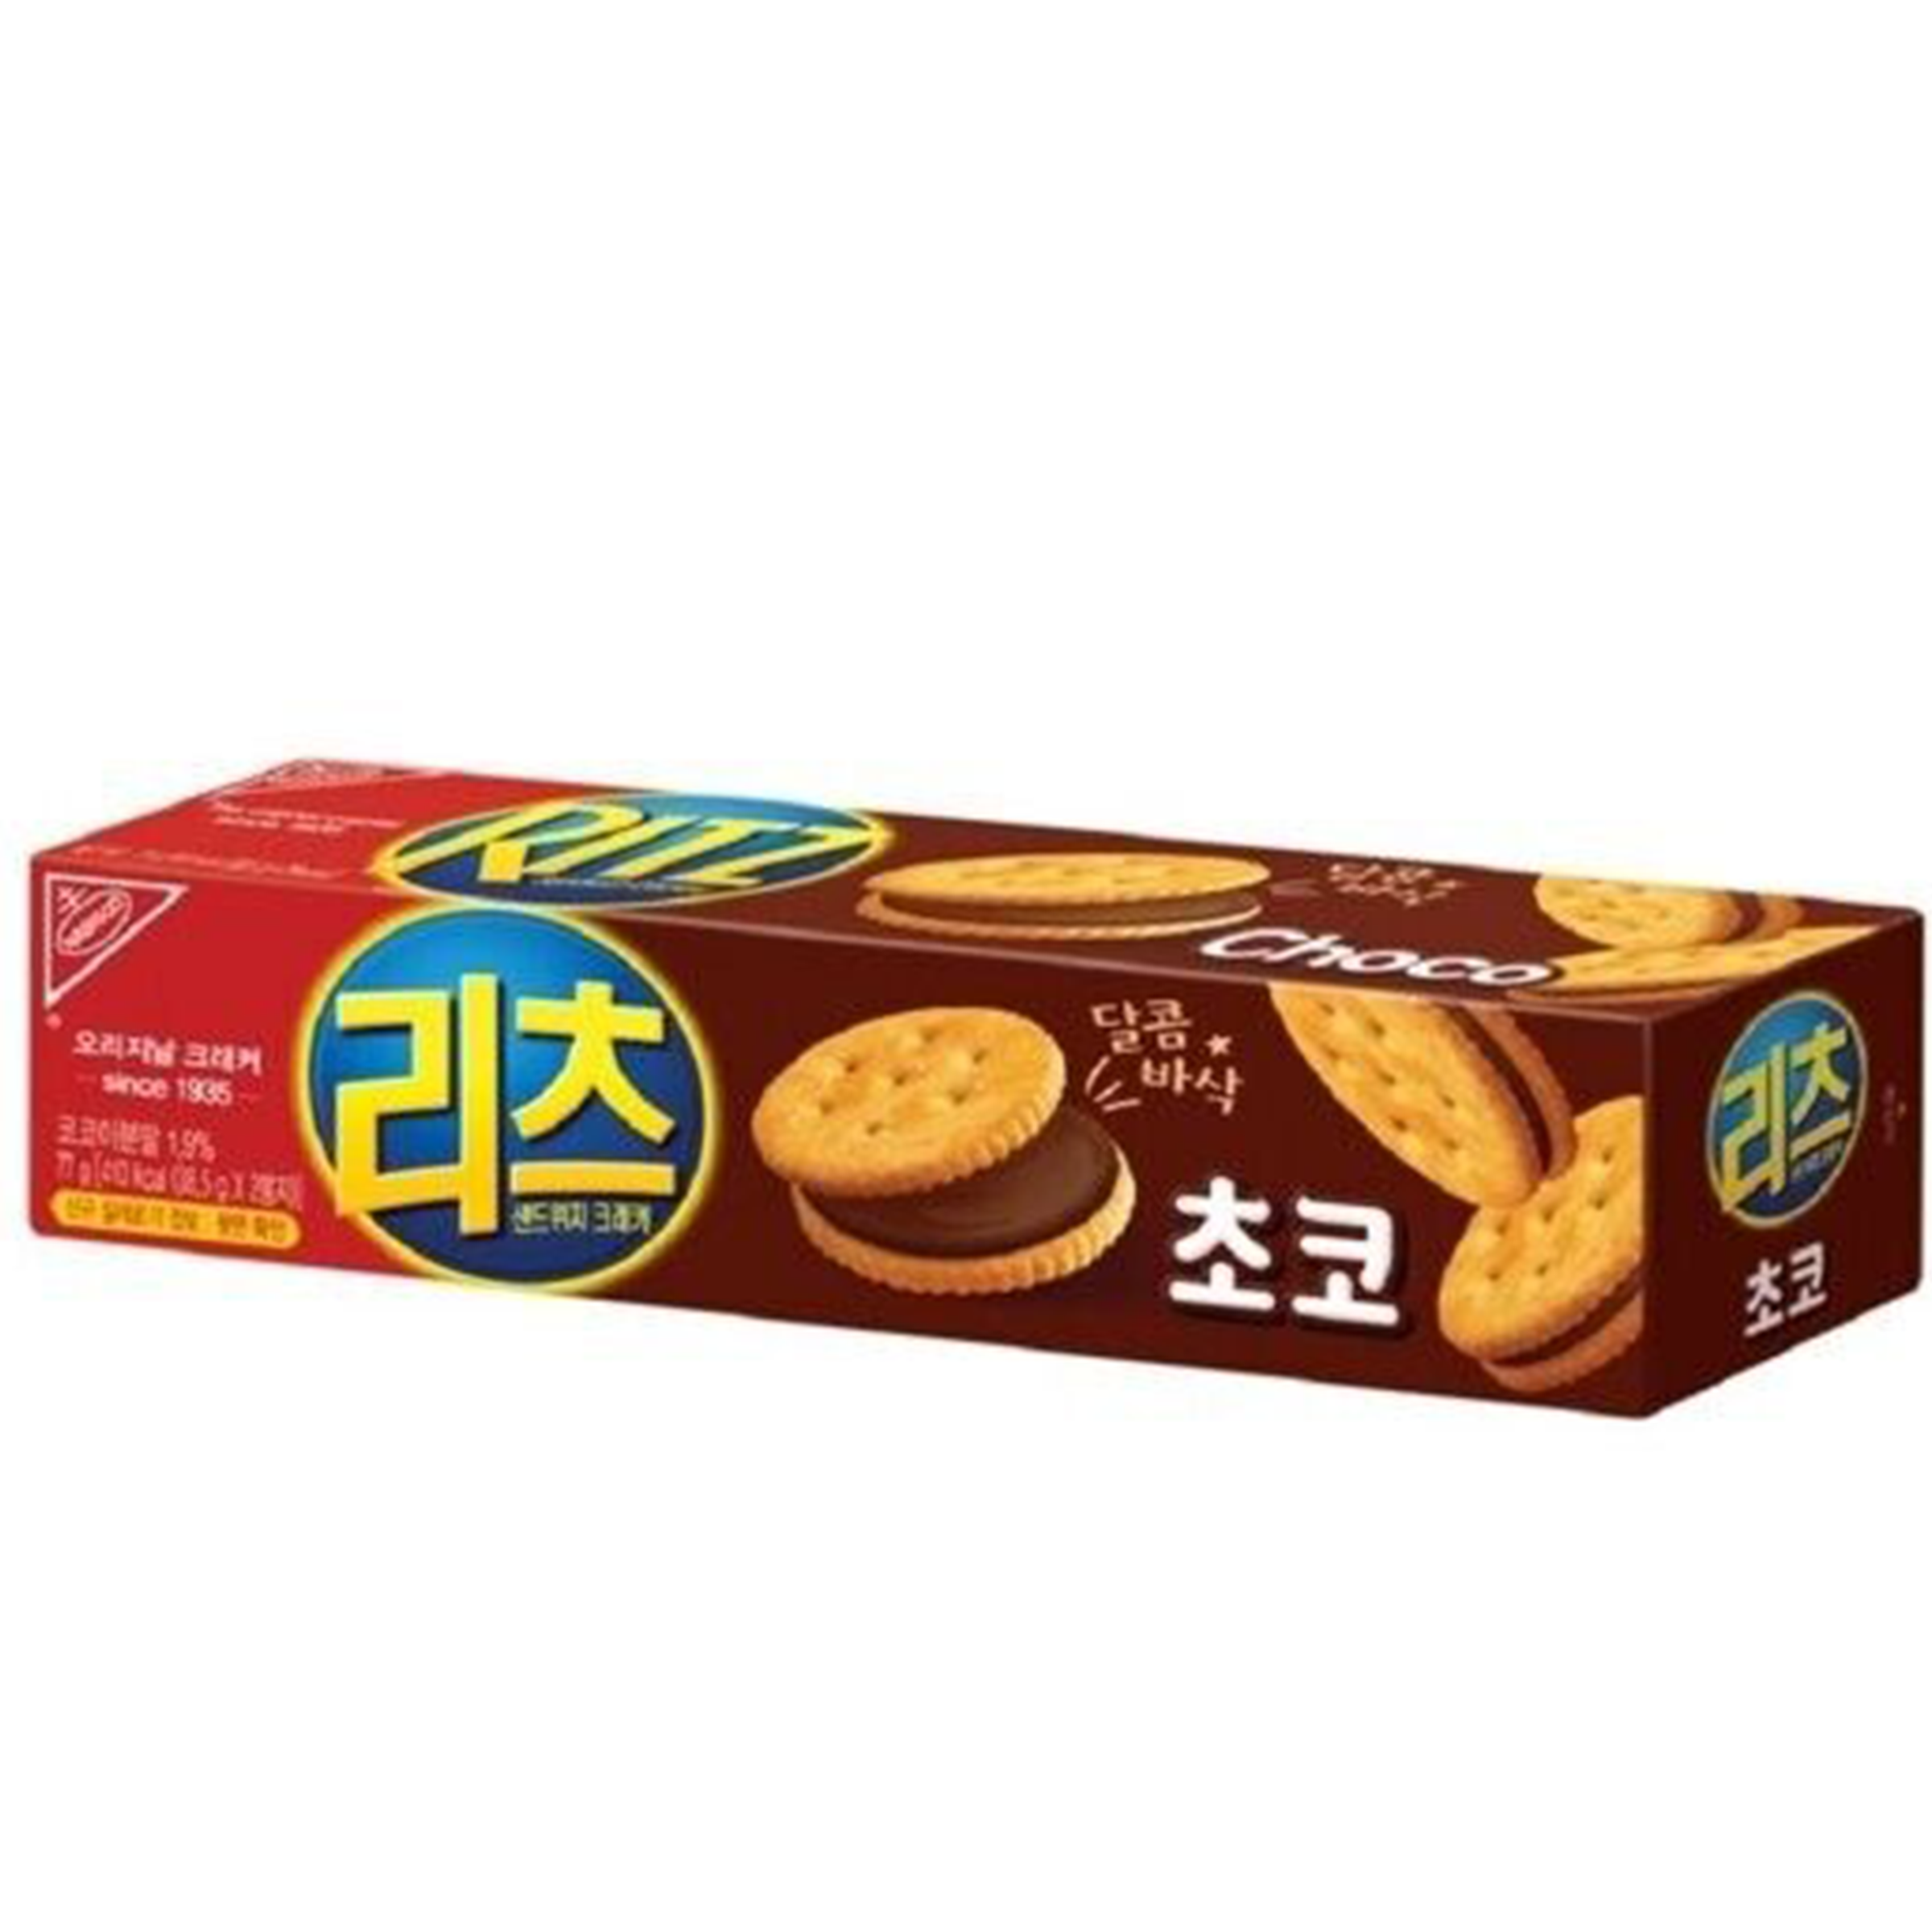 Ritz Cracker - Chocolate Flavor (Korea)